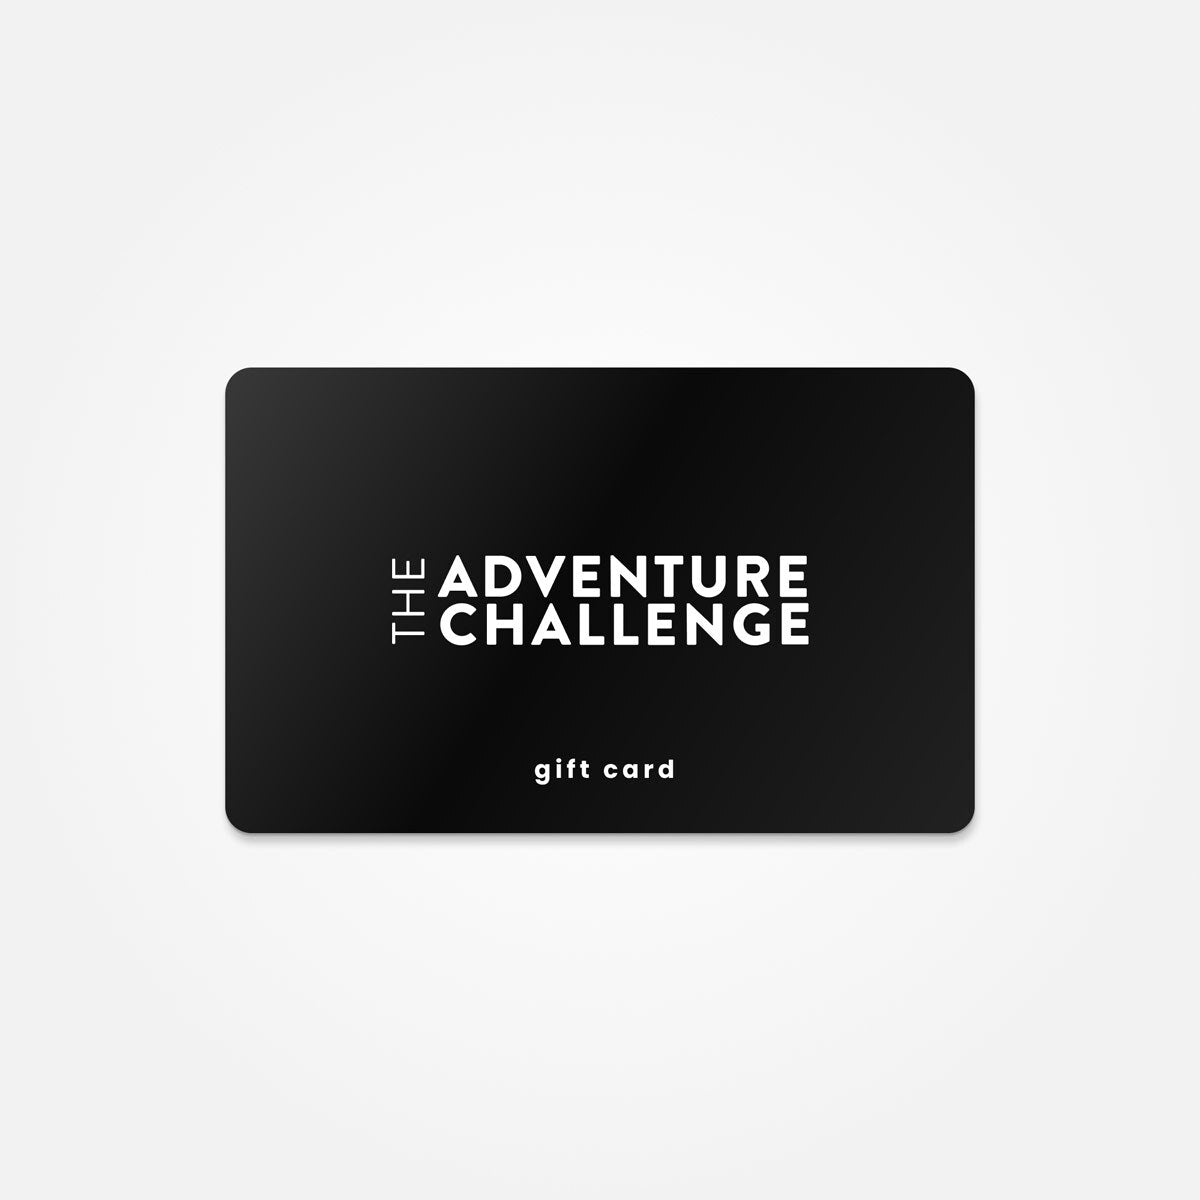 Travel Edition – The Adventure Challenge